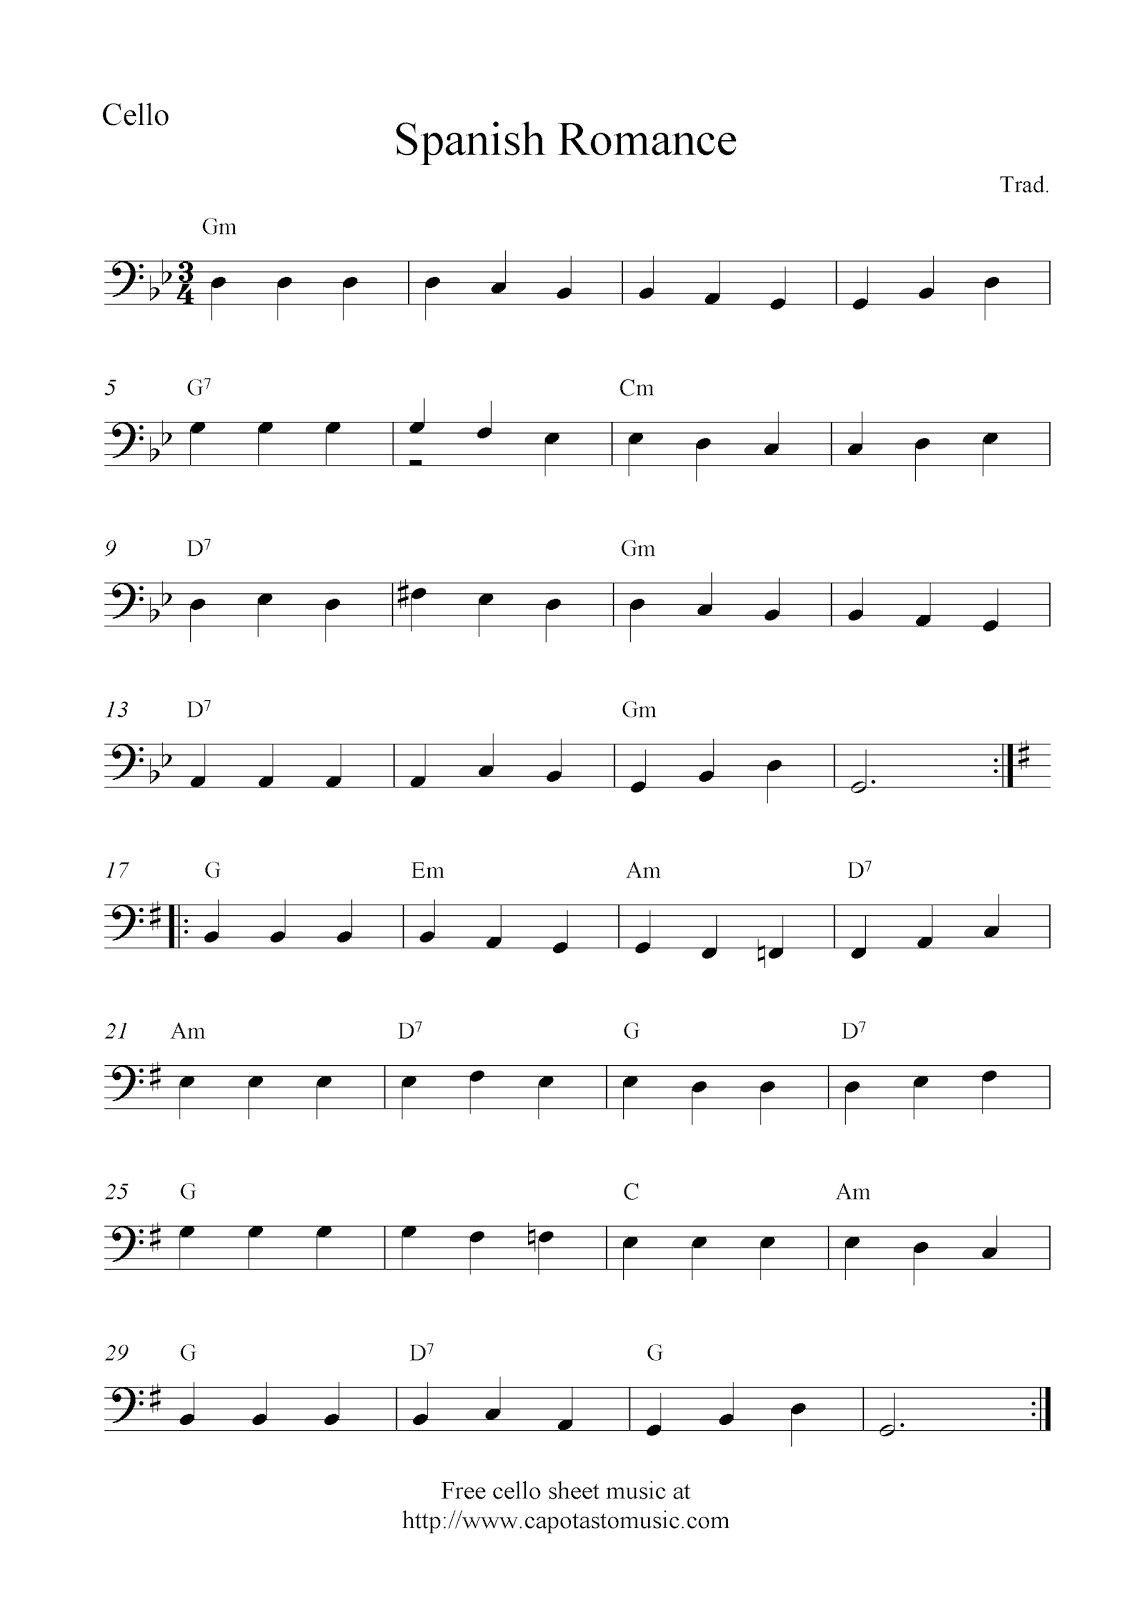 cello-music-sheets-free-beginner